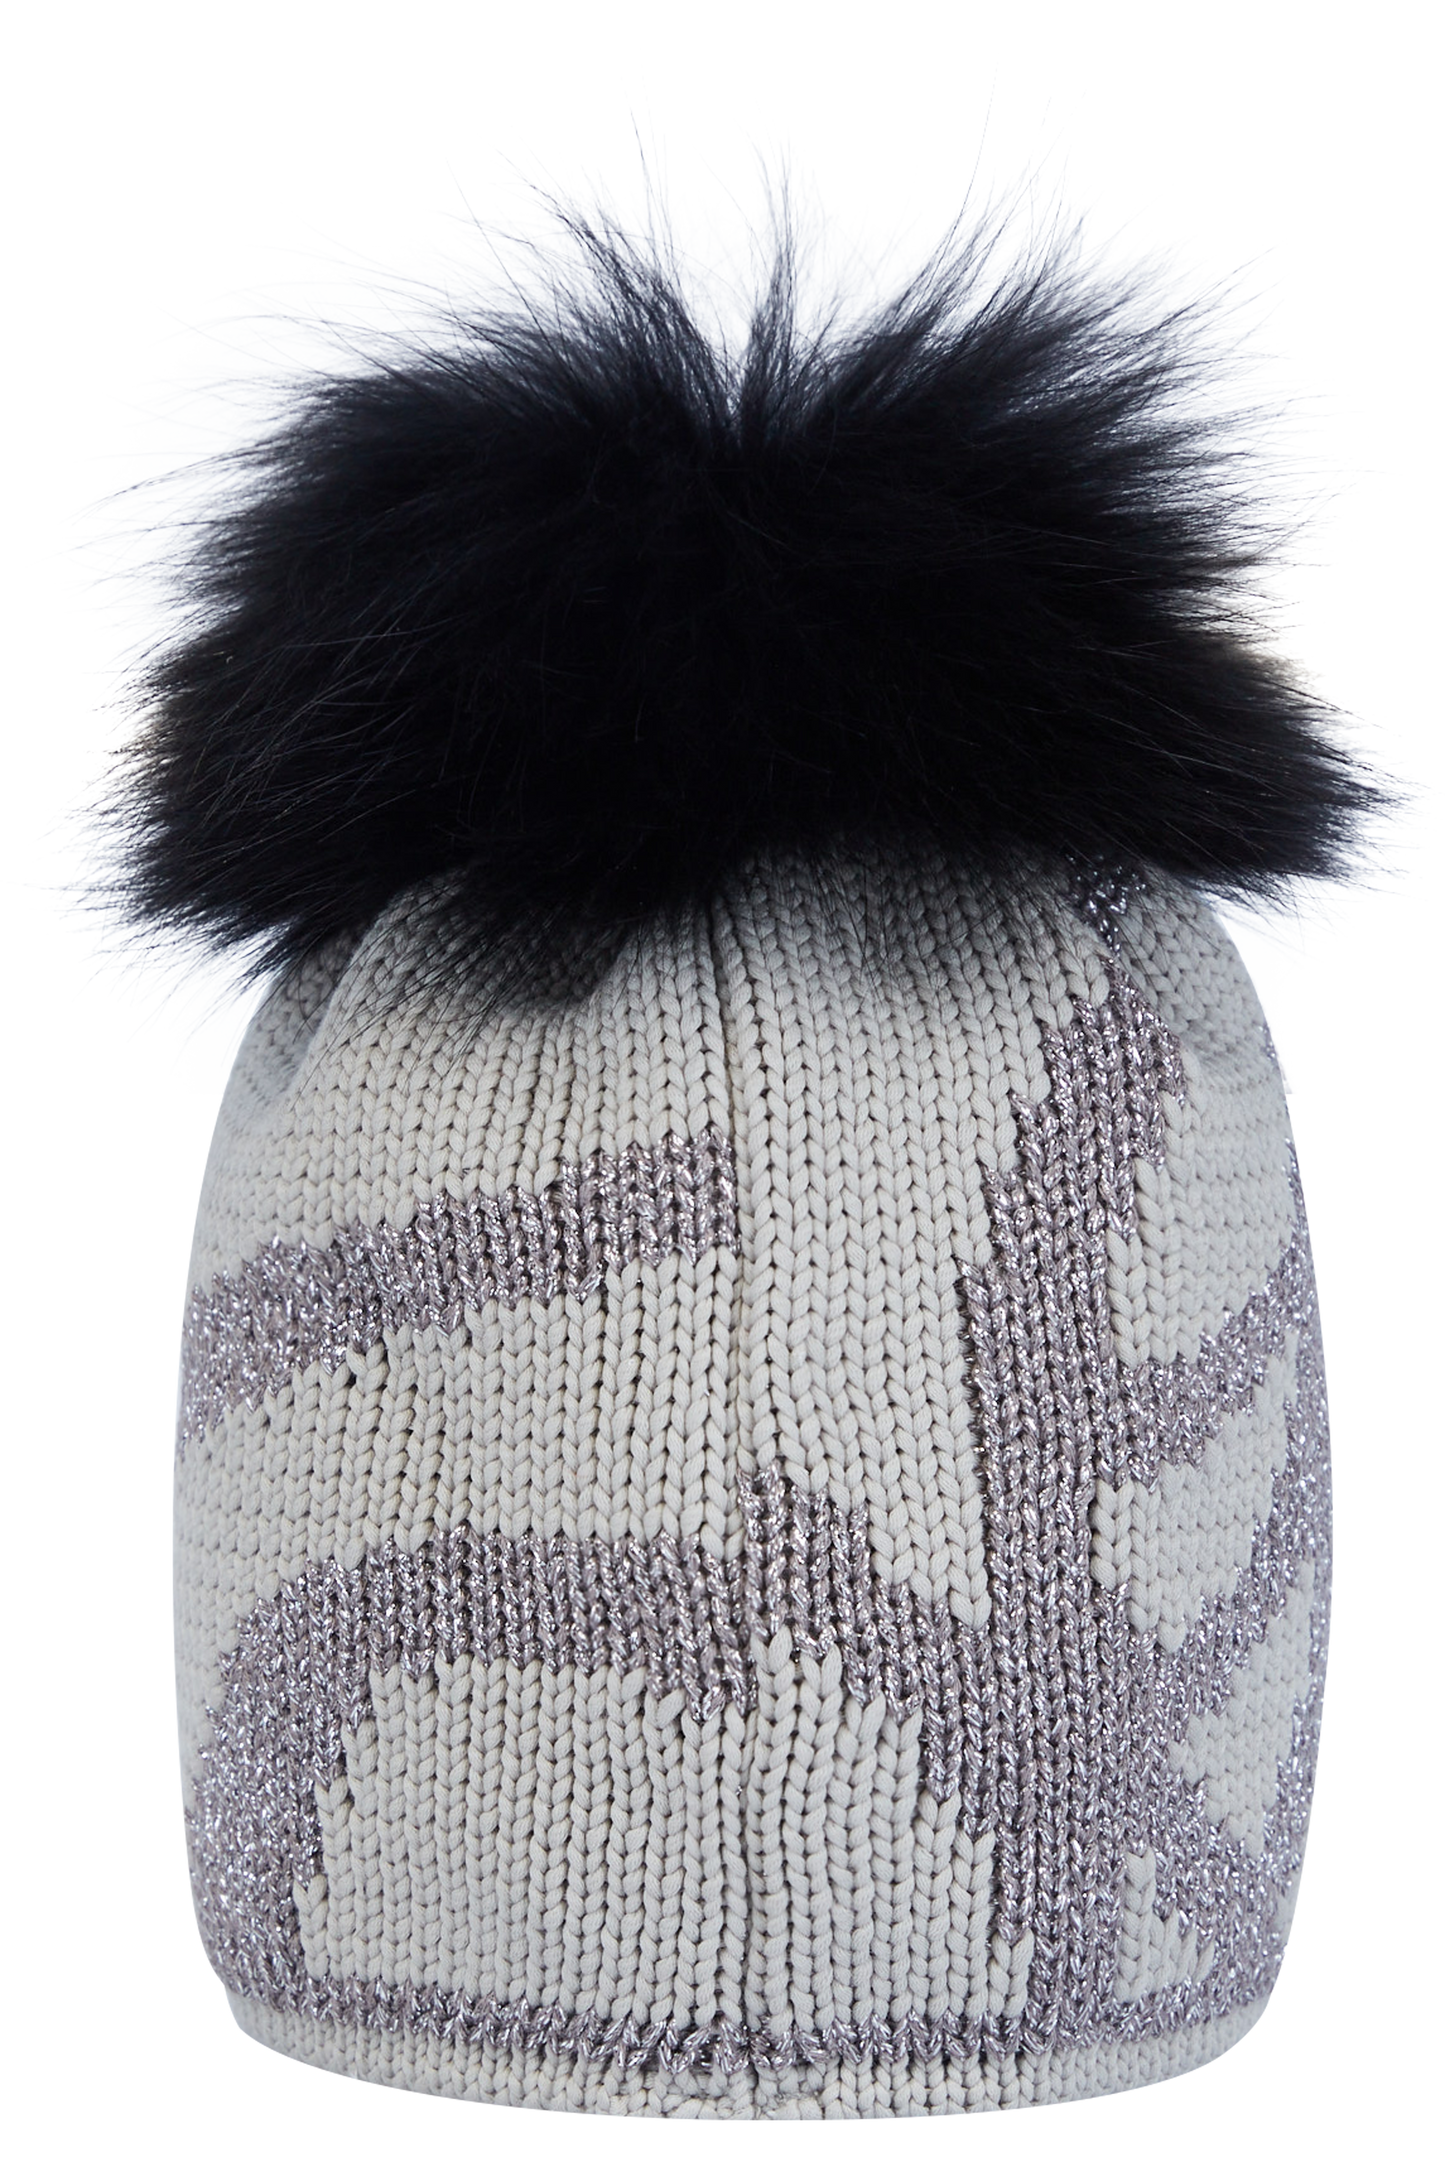 Coarse Knit Hat with Glittering Pattern